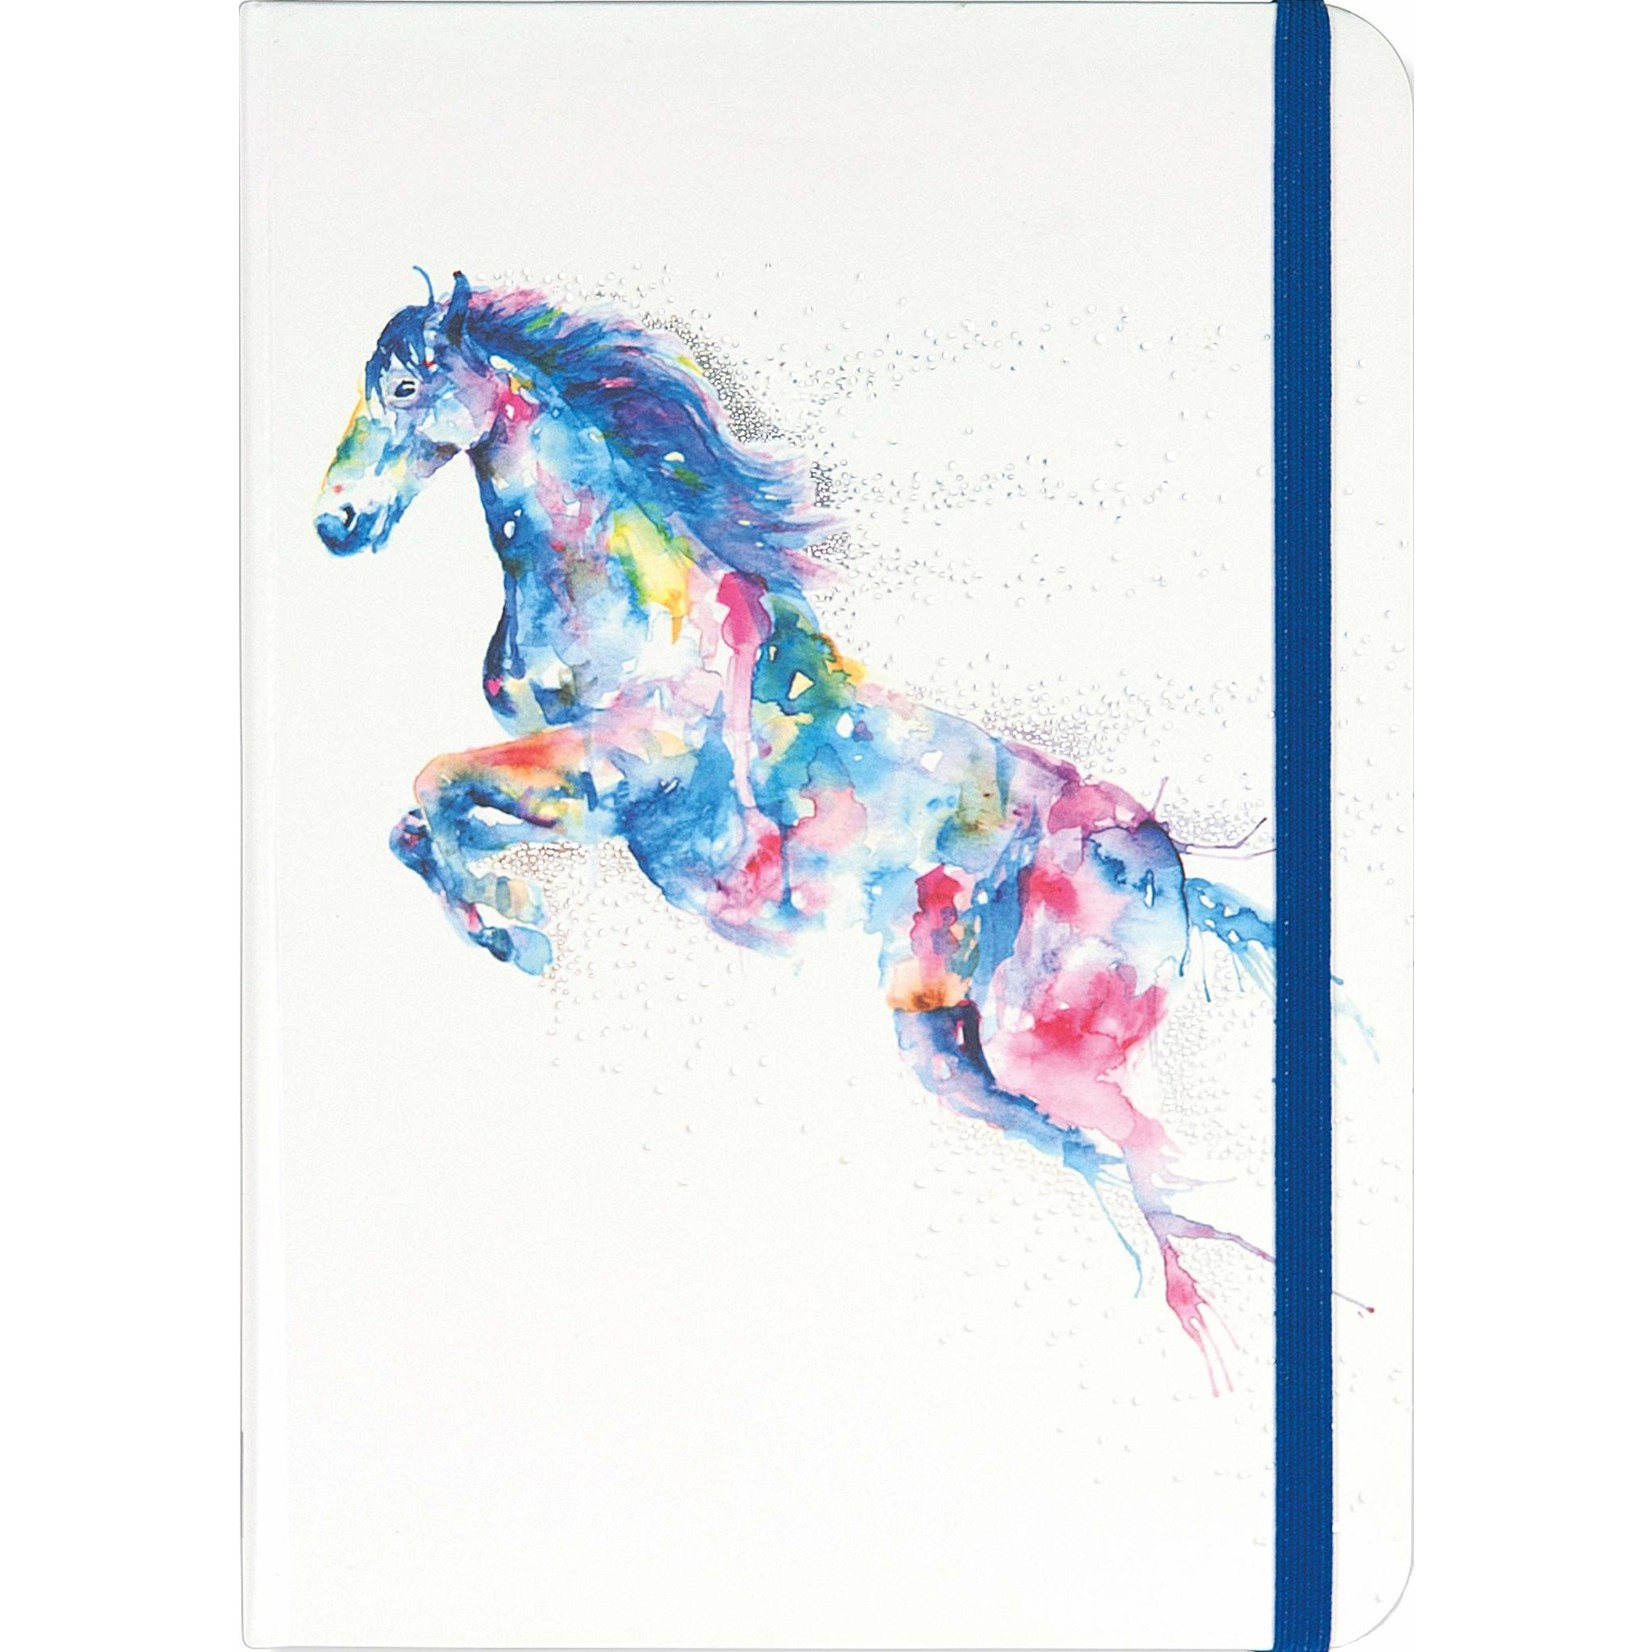 Peter Pauper Press Small Journal: Watercolor Horse